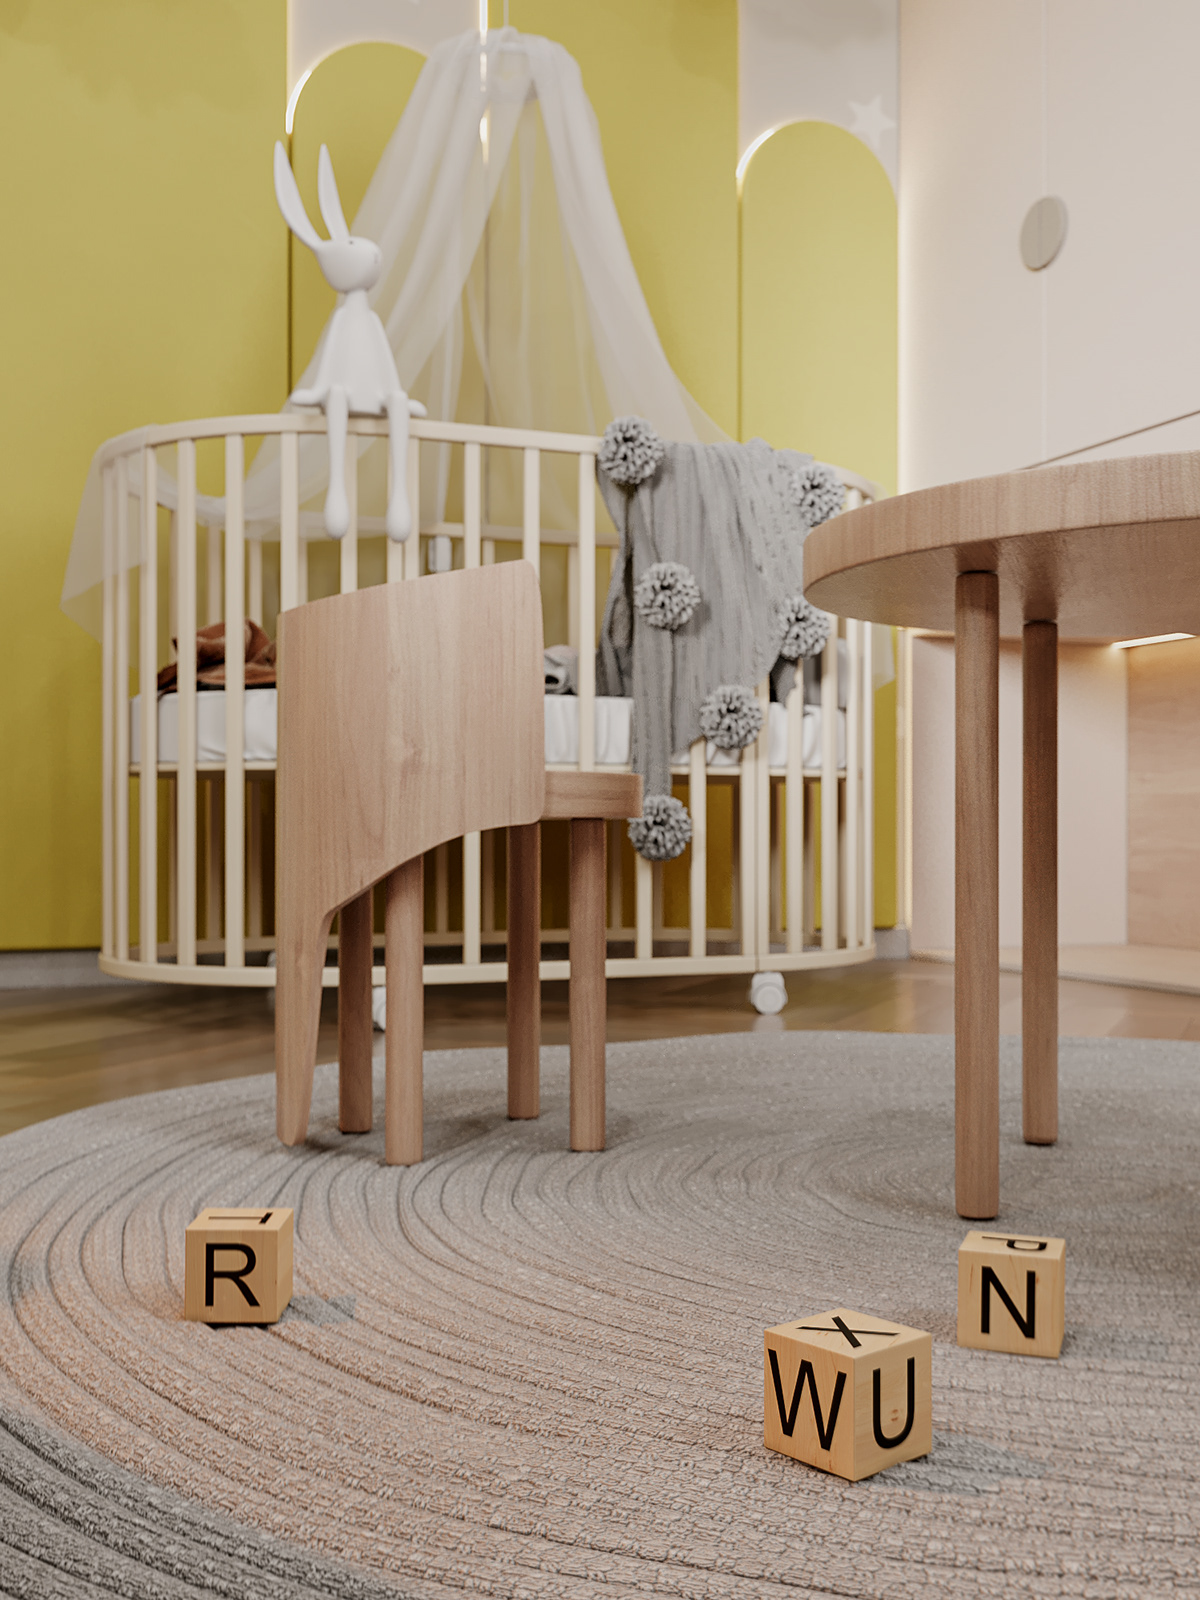 3D children Interior Render visualization дизайн интерьер визуализация детская